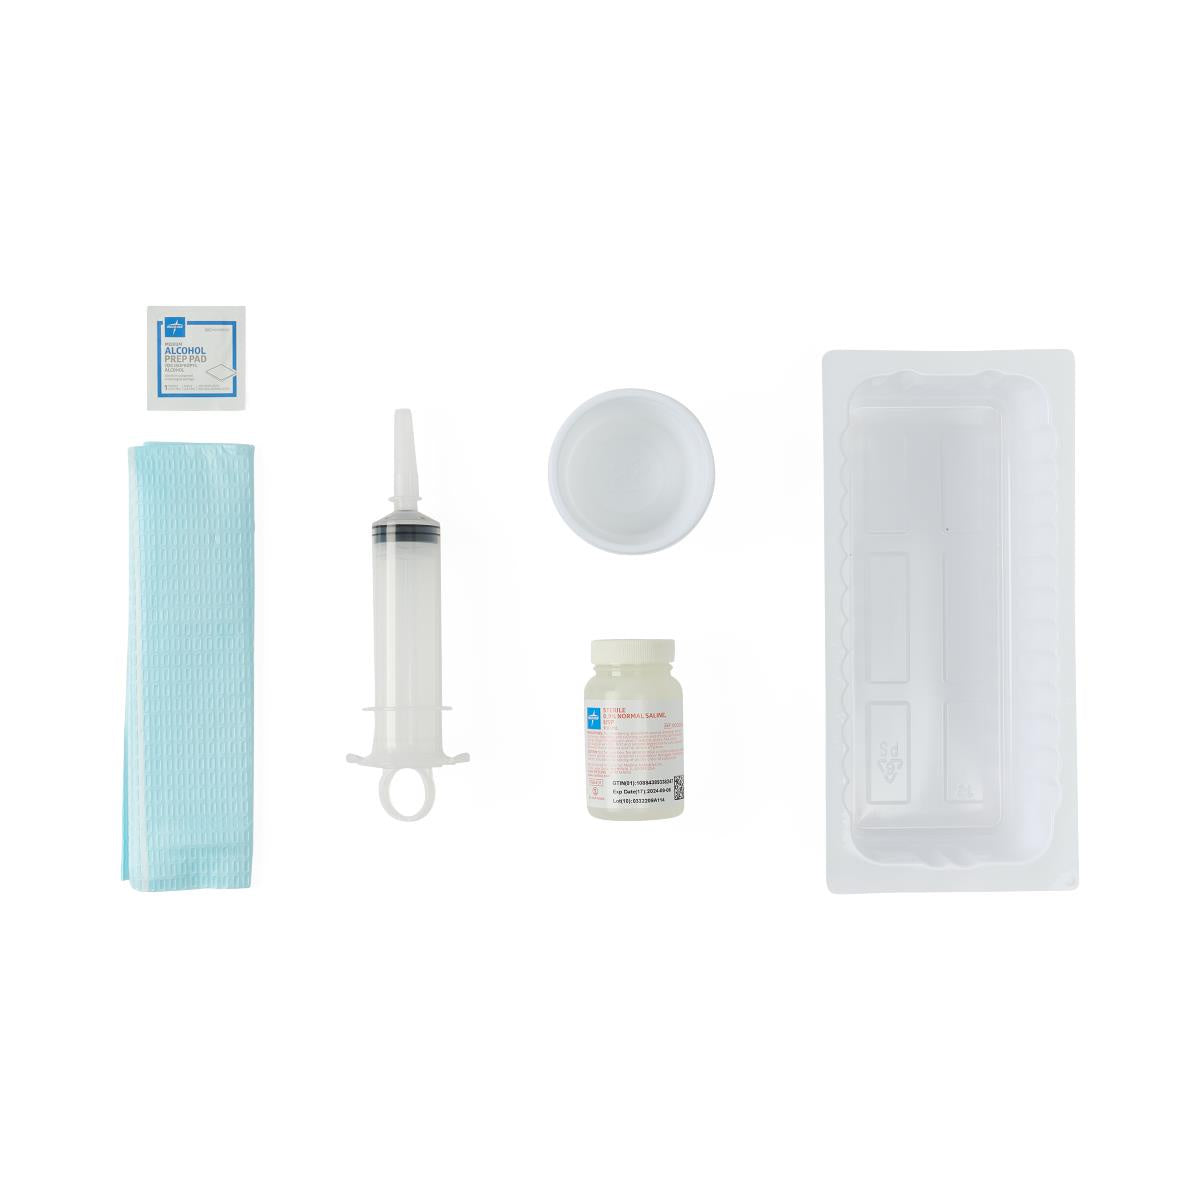 DYNC2303H - Sterile Piston Irrigation Syringe Tray with Saline